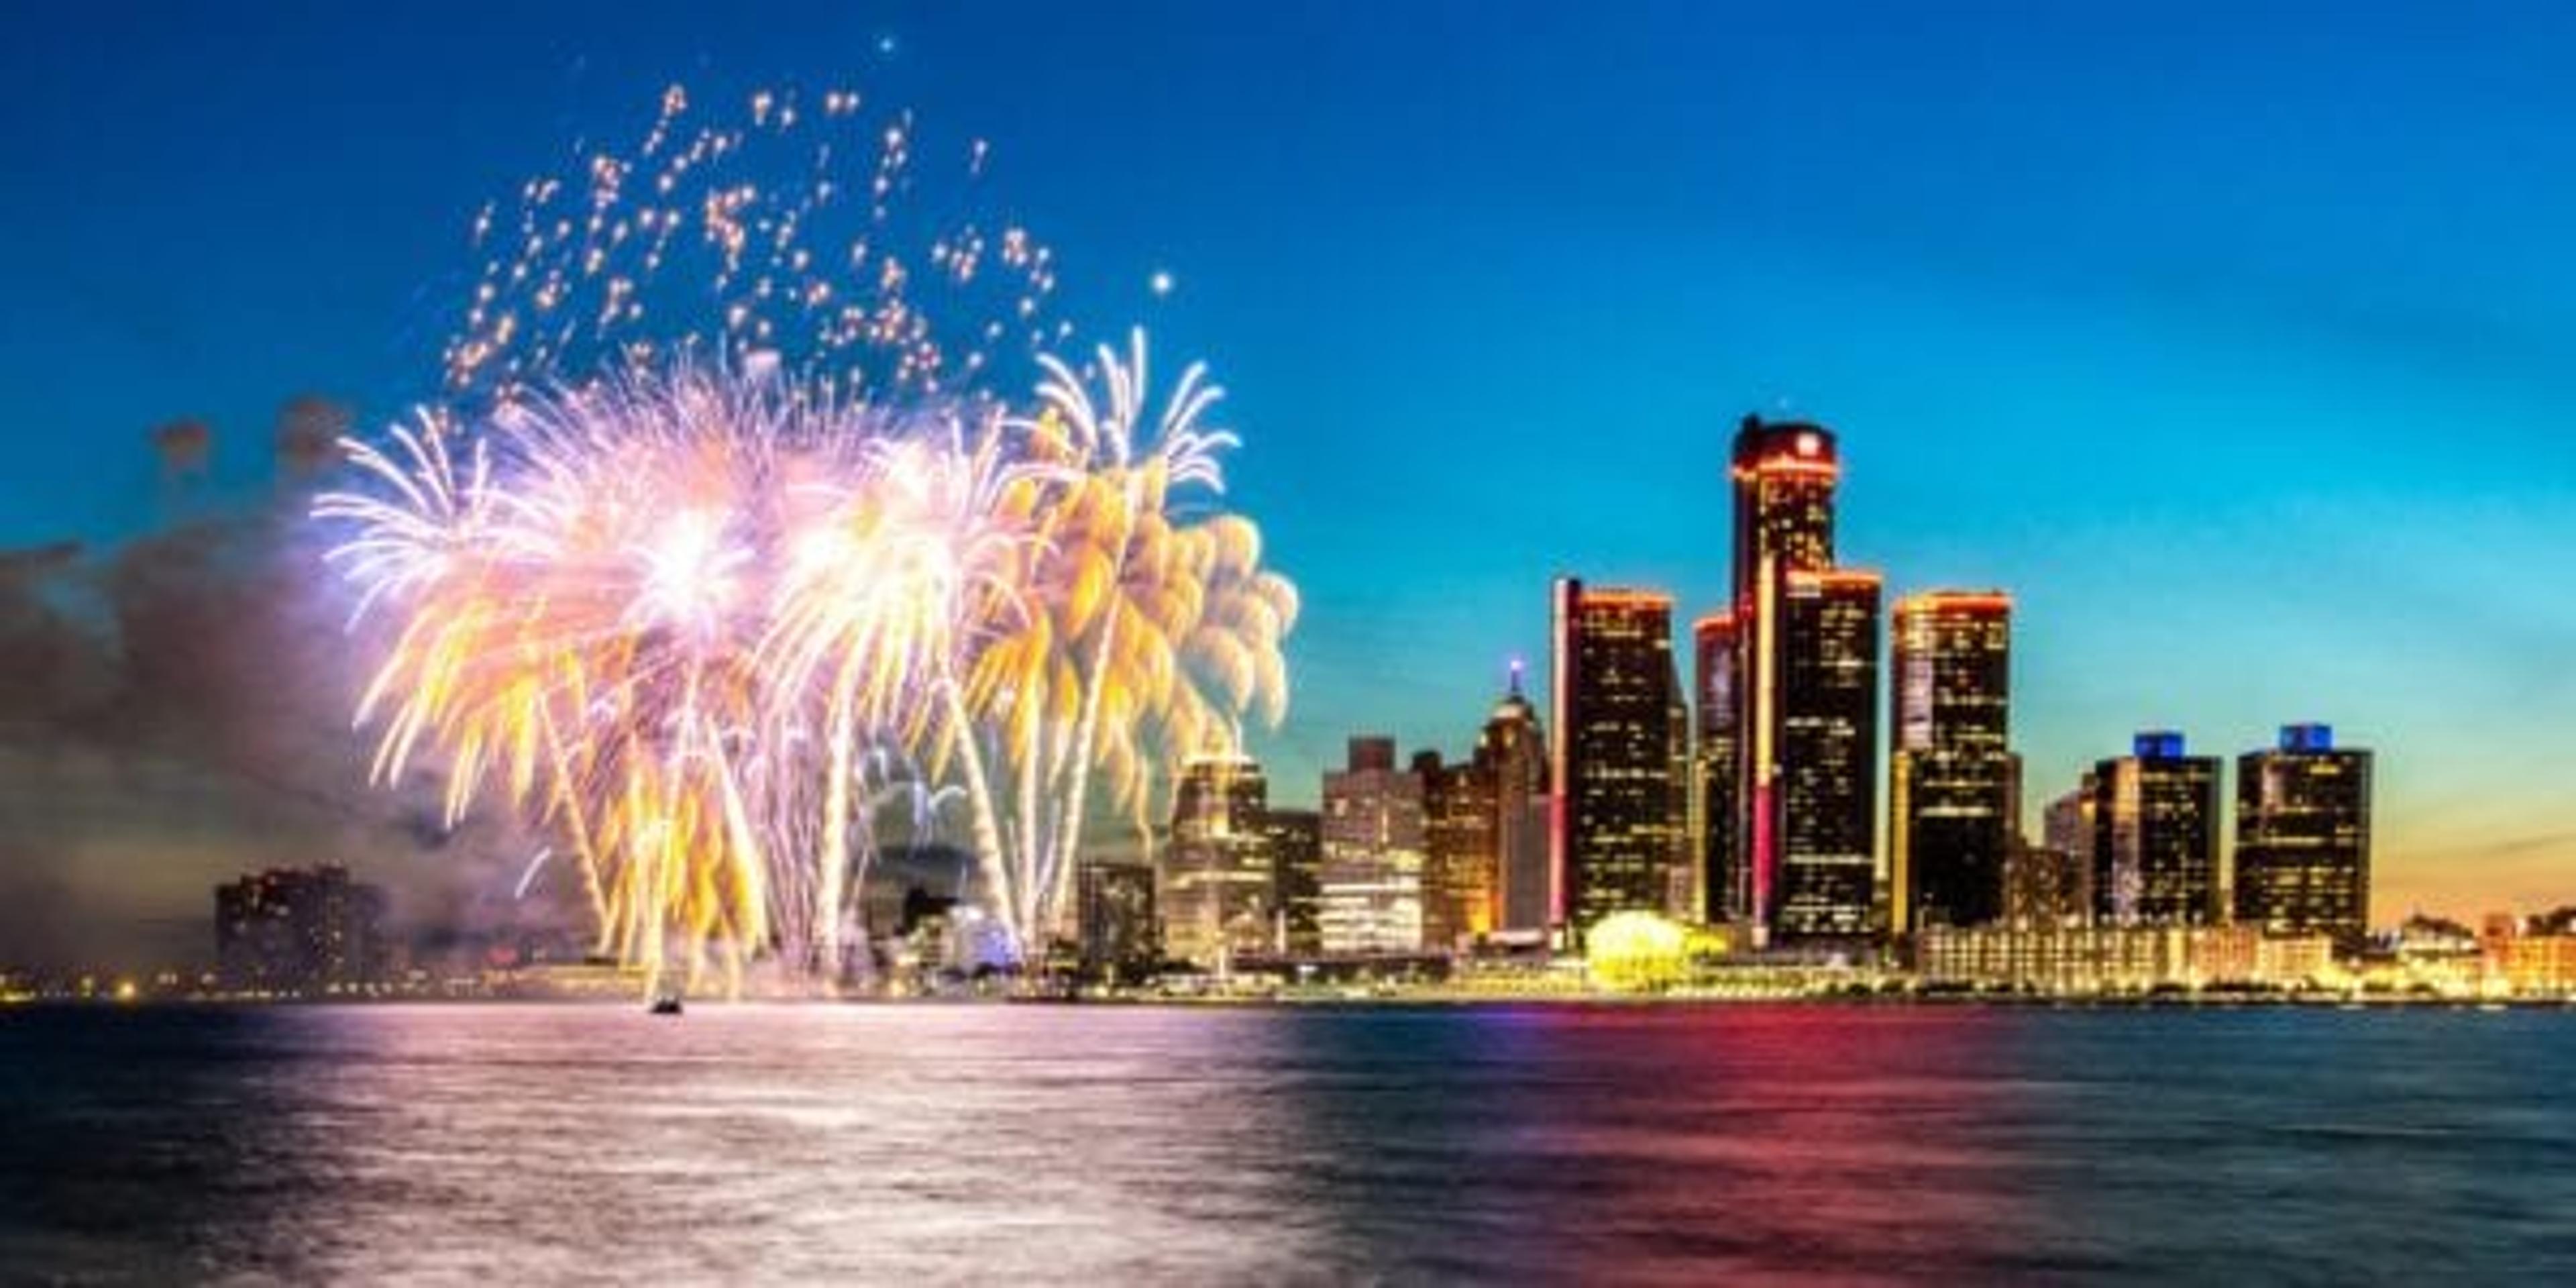 Fireworks Display over Detroit, Michigan